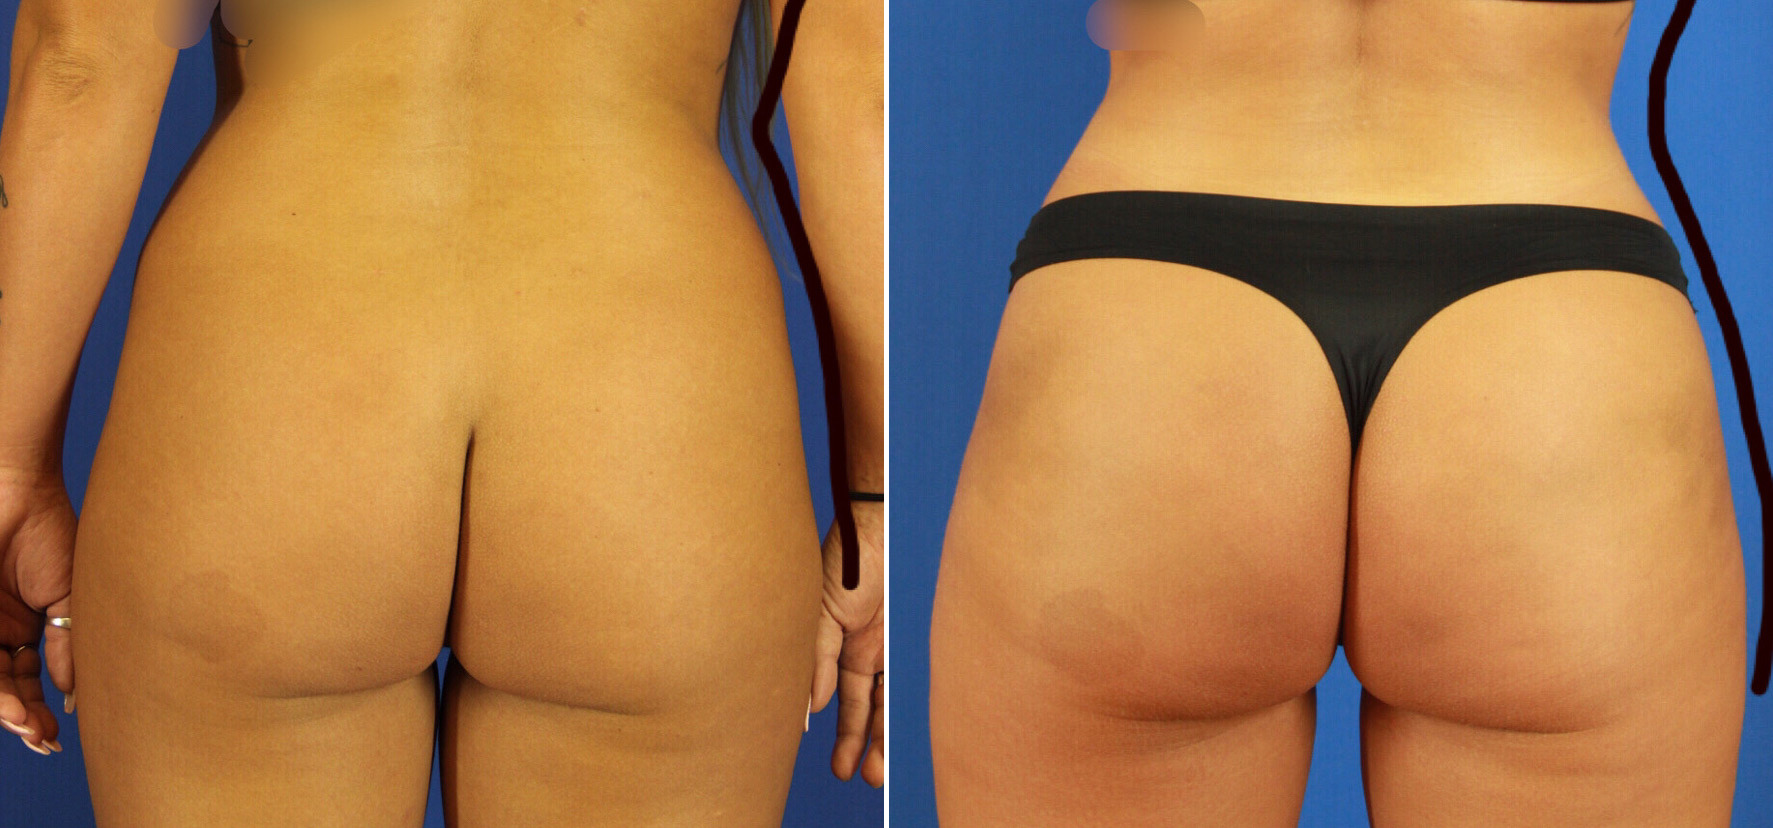 Brazilian Butt Lift Surgery Madison & Milwaukee, Before and After Photo...